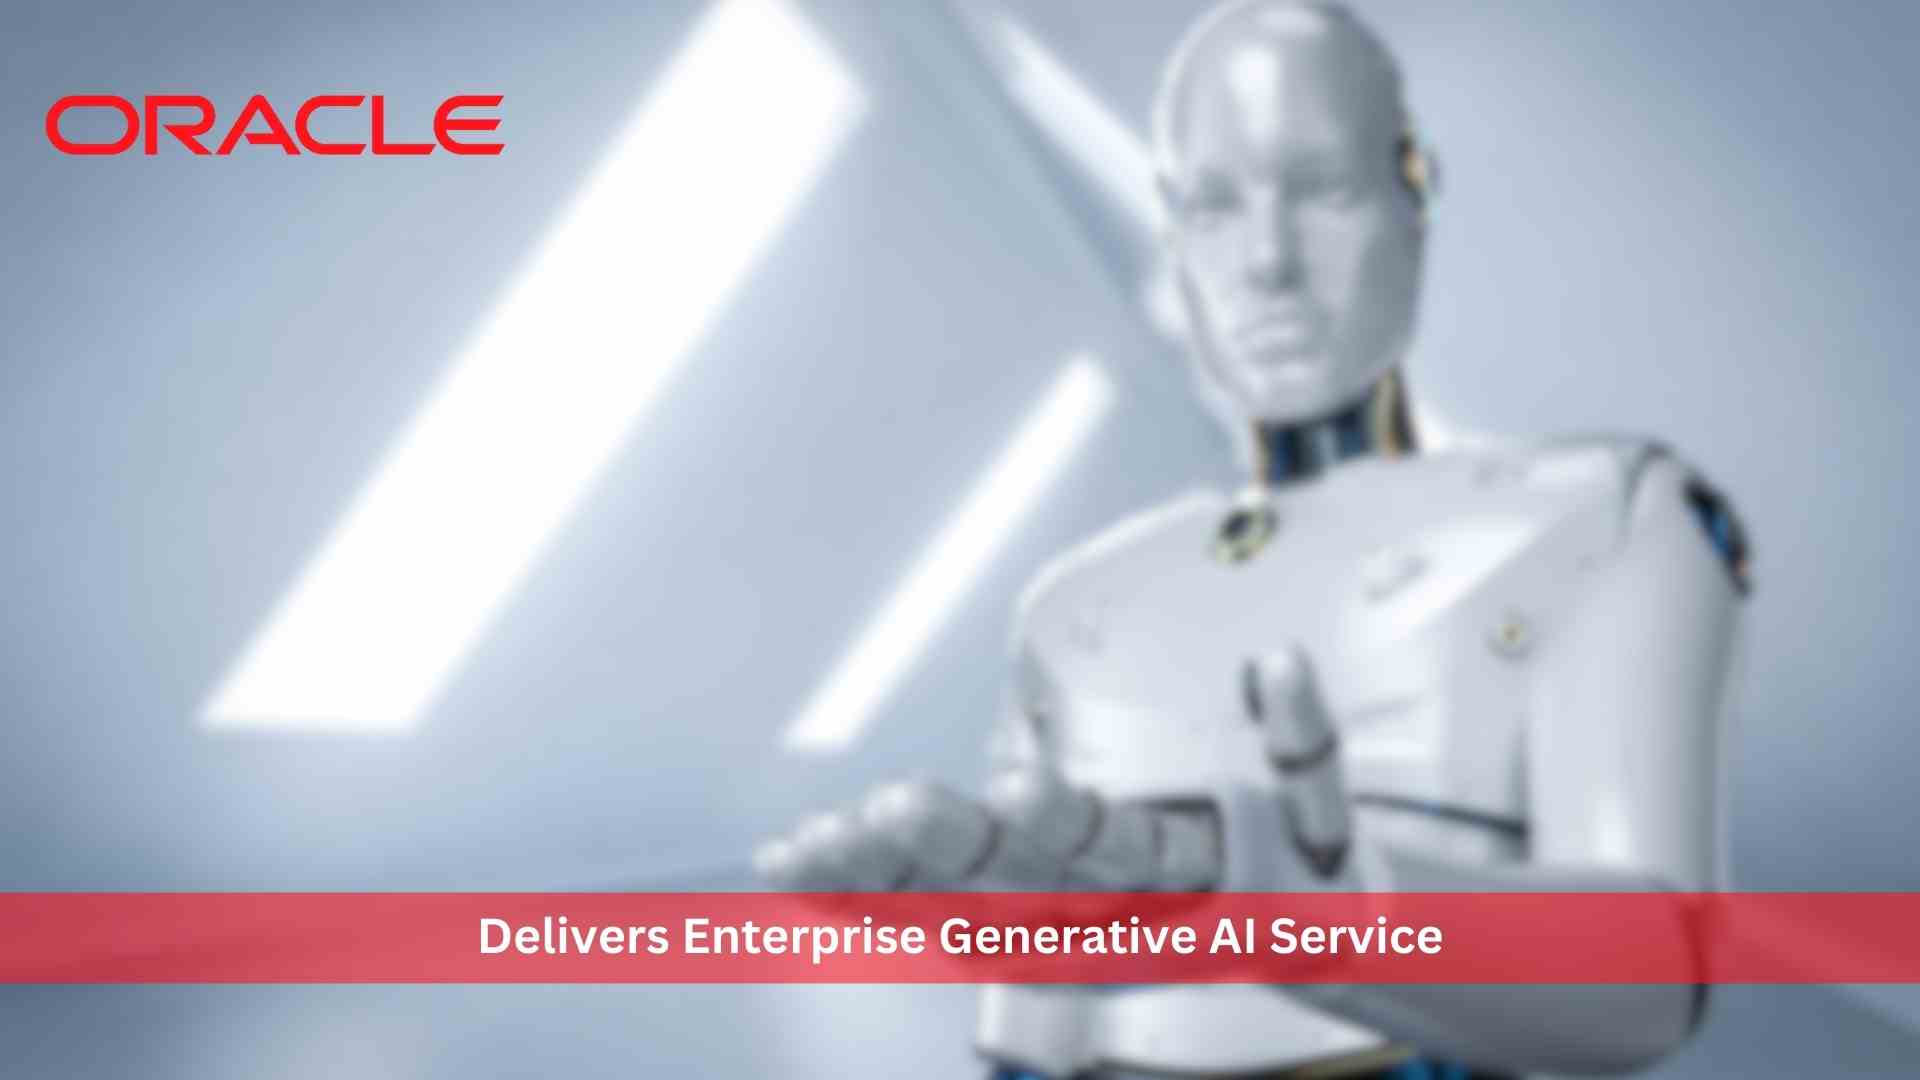 Oracle Cloud Infrastructure Delivers Enterprise Generative AI Service